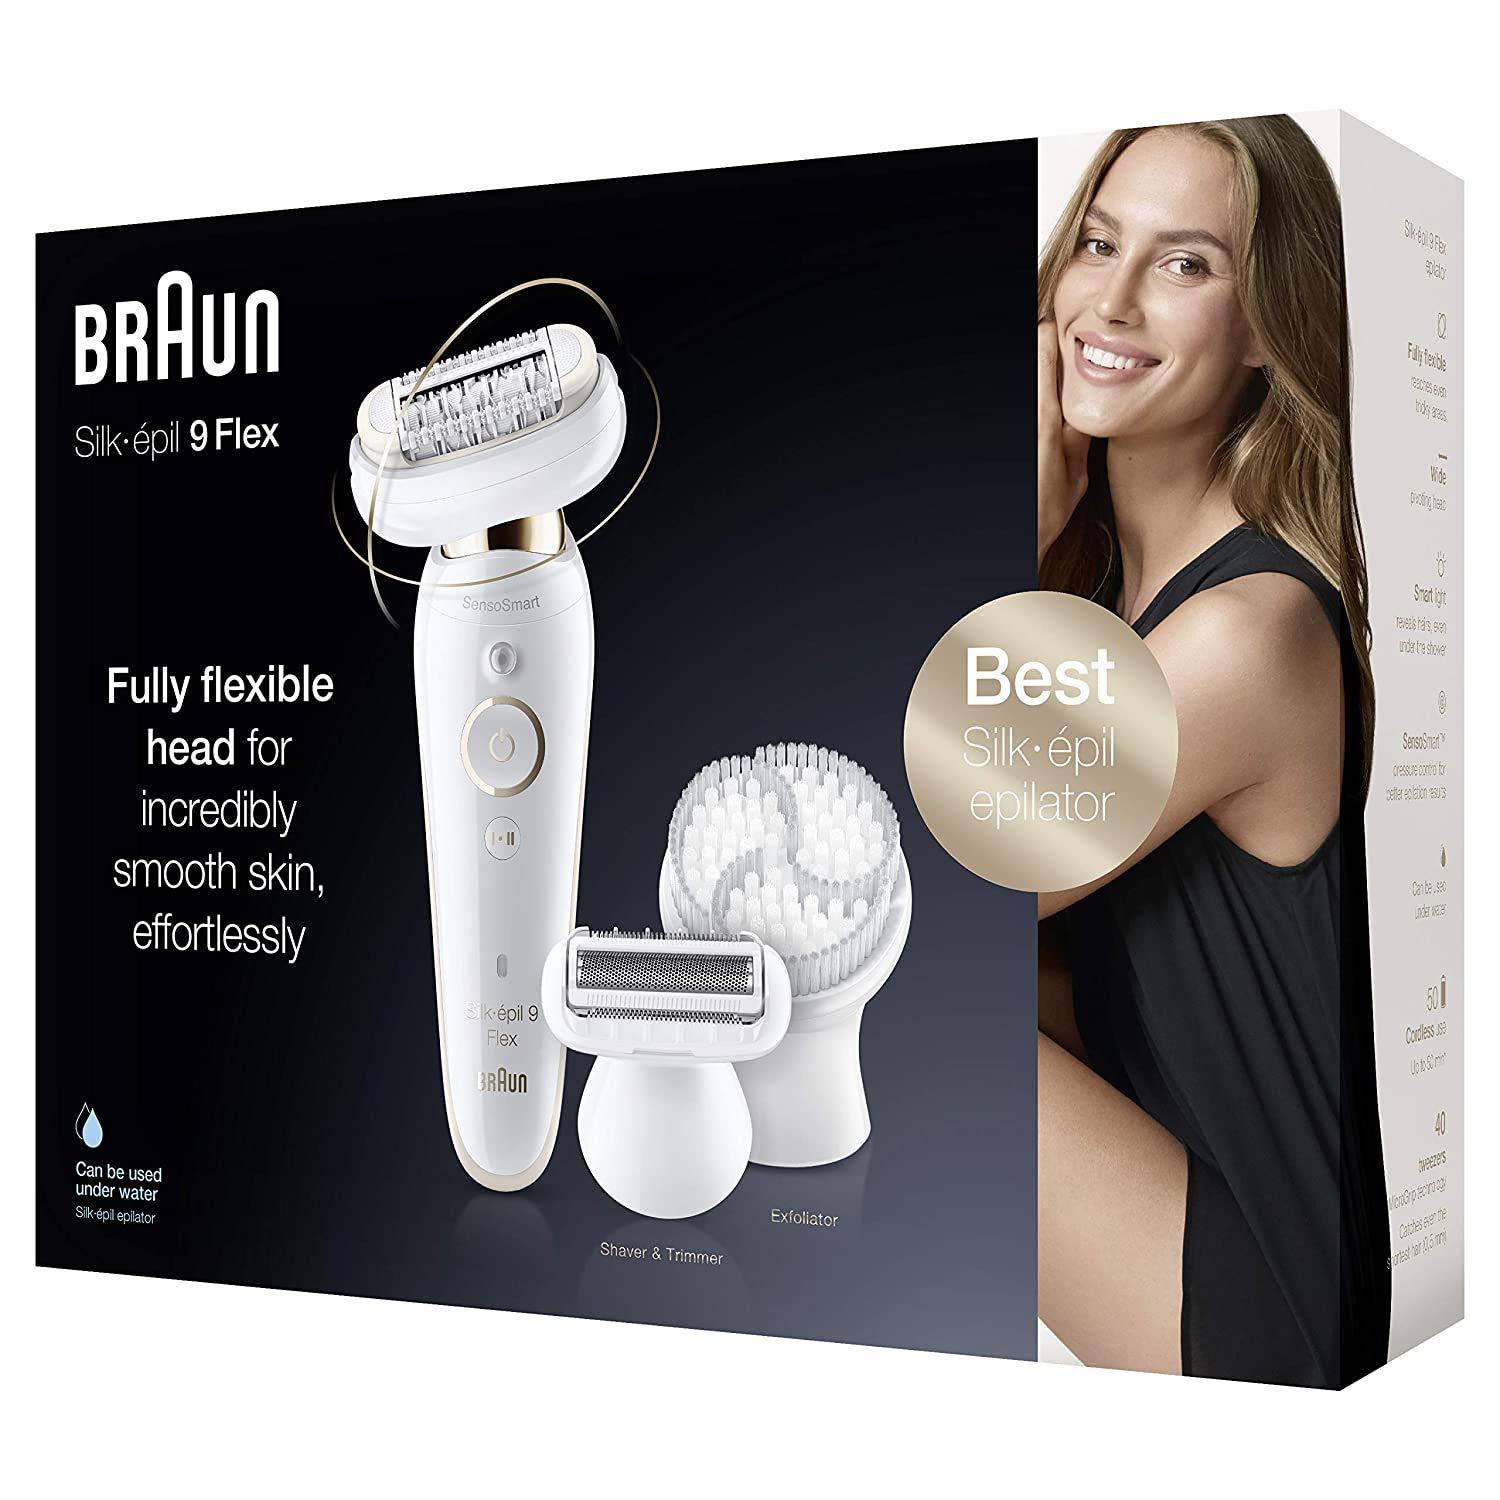 Braun Epilator Silk-pil 9 9-030 with Flexible Head, Facial Hair